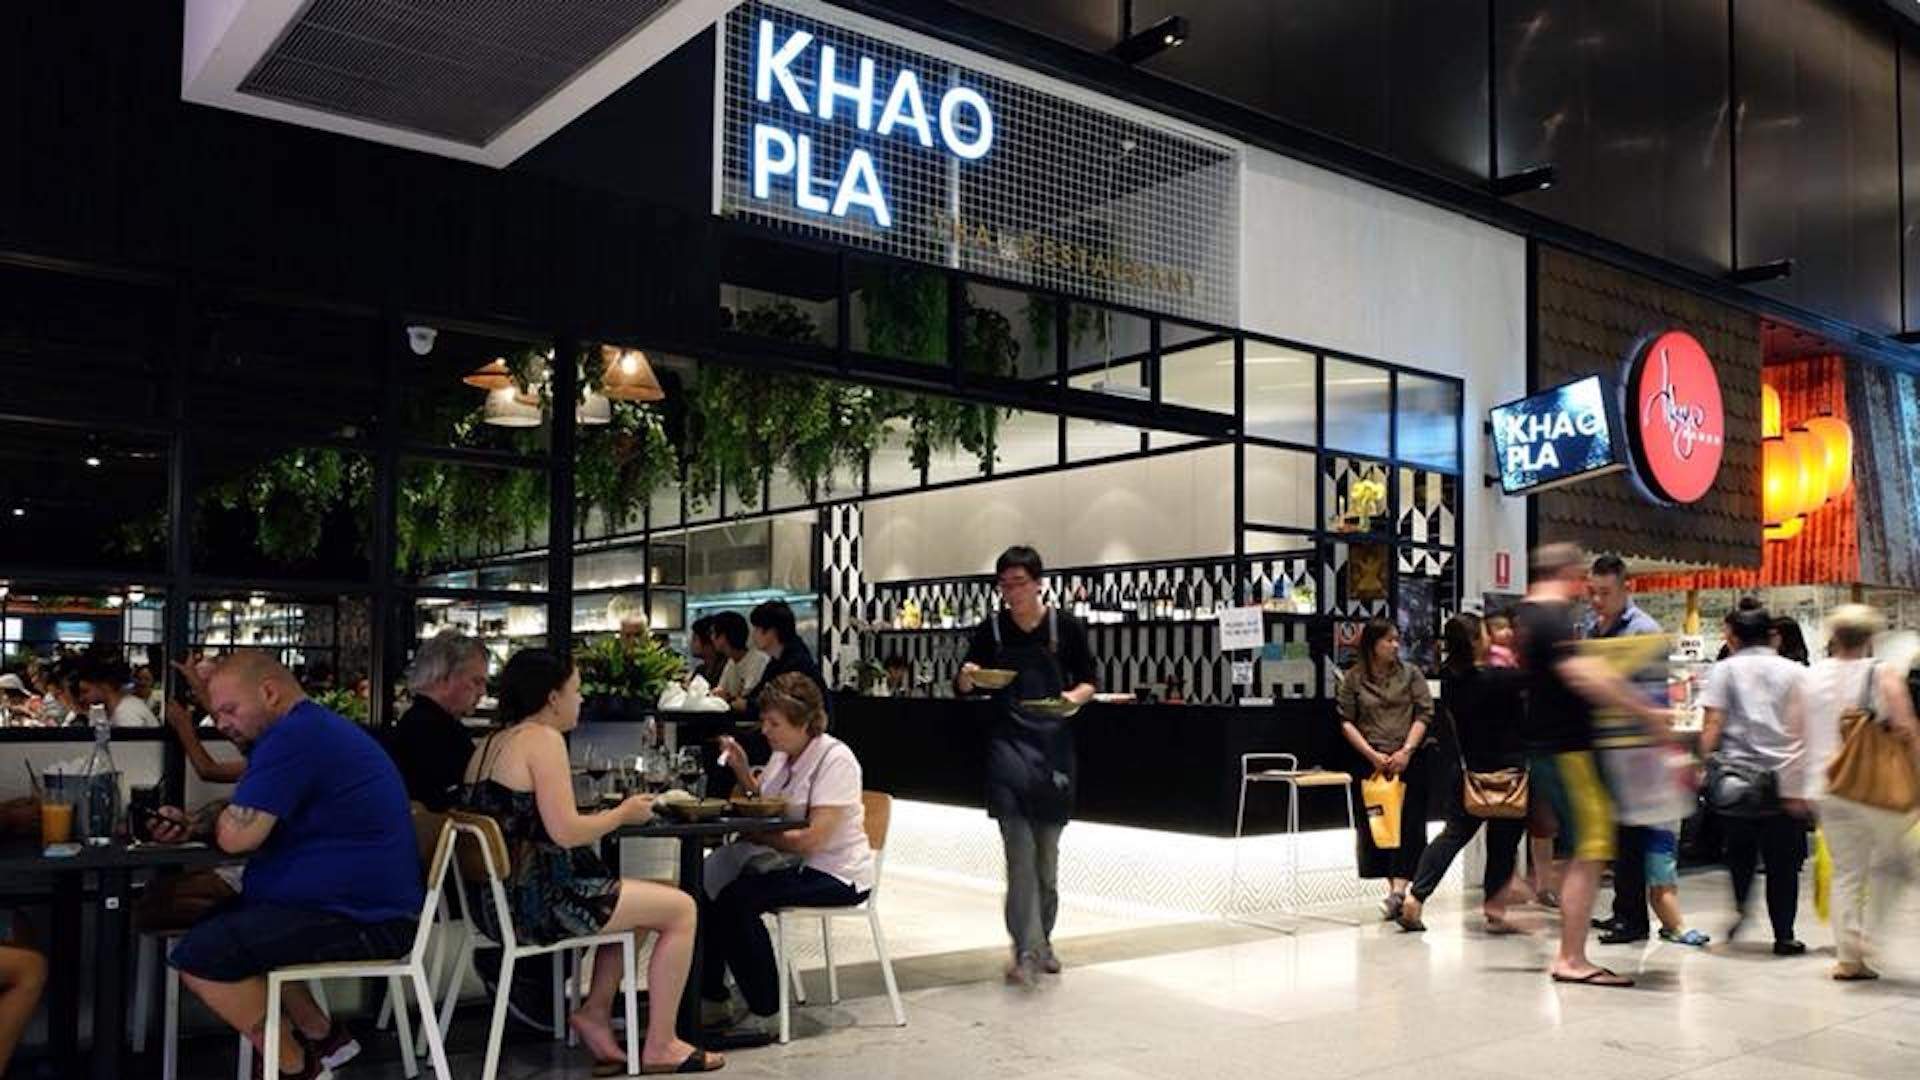 Khao Pla - one of the best BYO restaurants in Sydney.